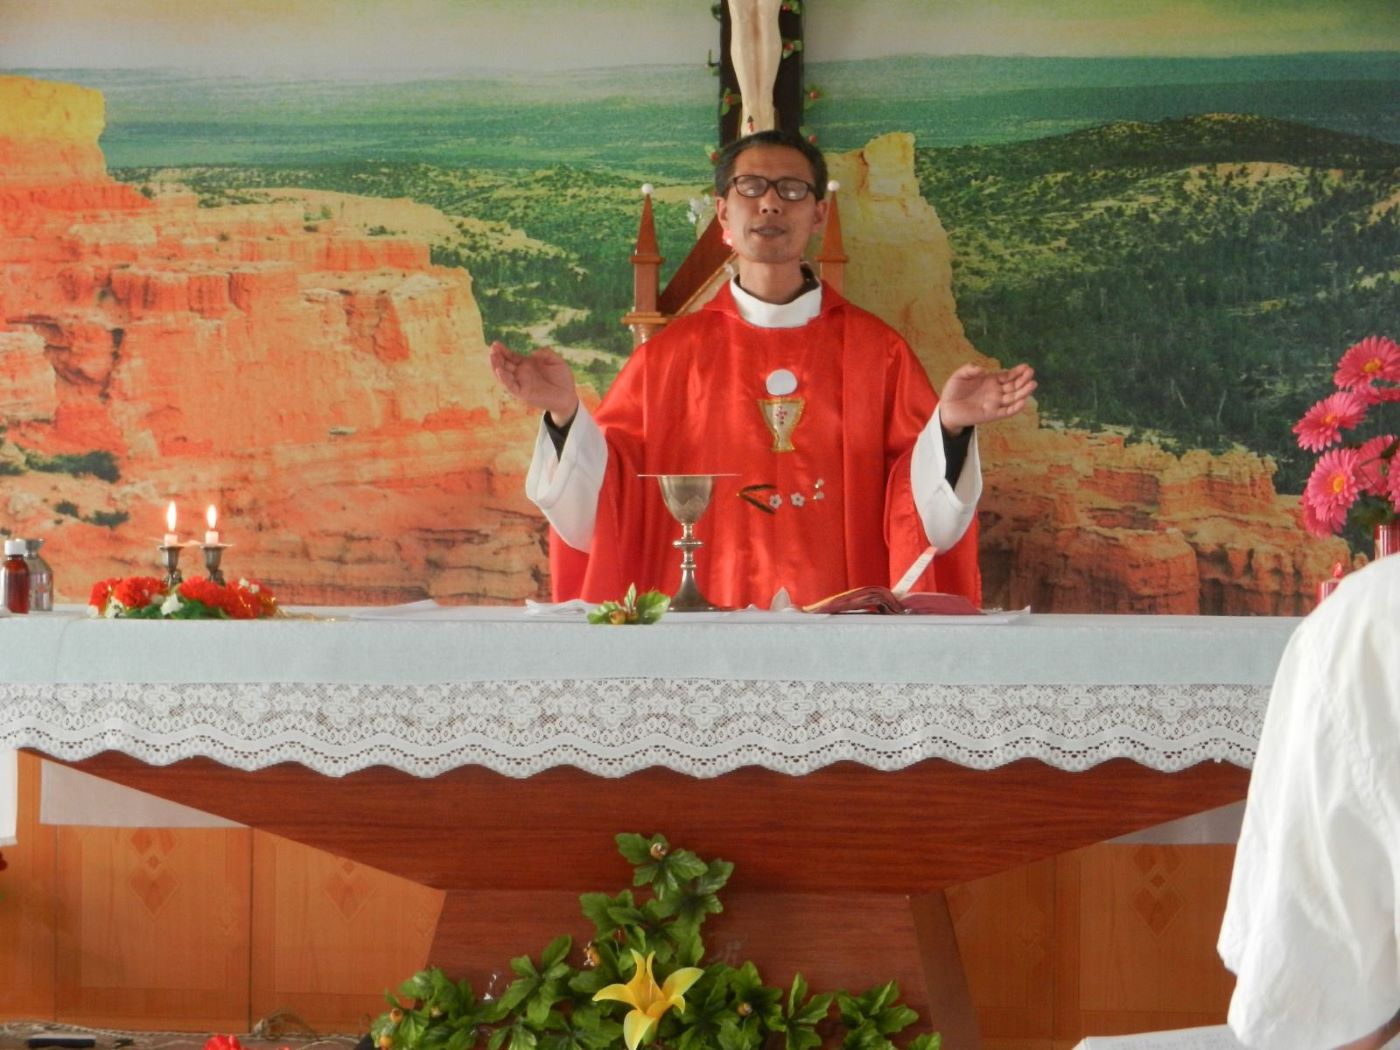 El obispo chino fiel a Roma, Mons. Zhang Weizhu, en paradero desconocido desde hace 9 meses